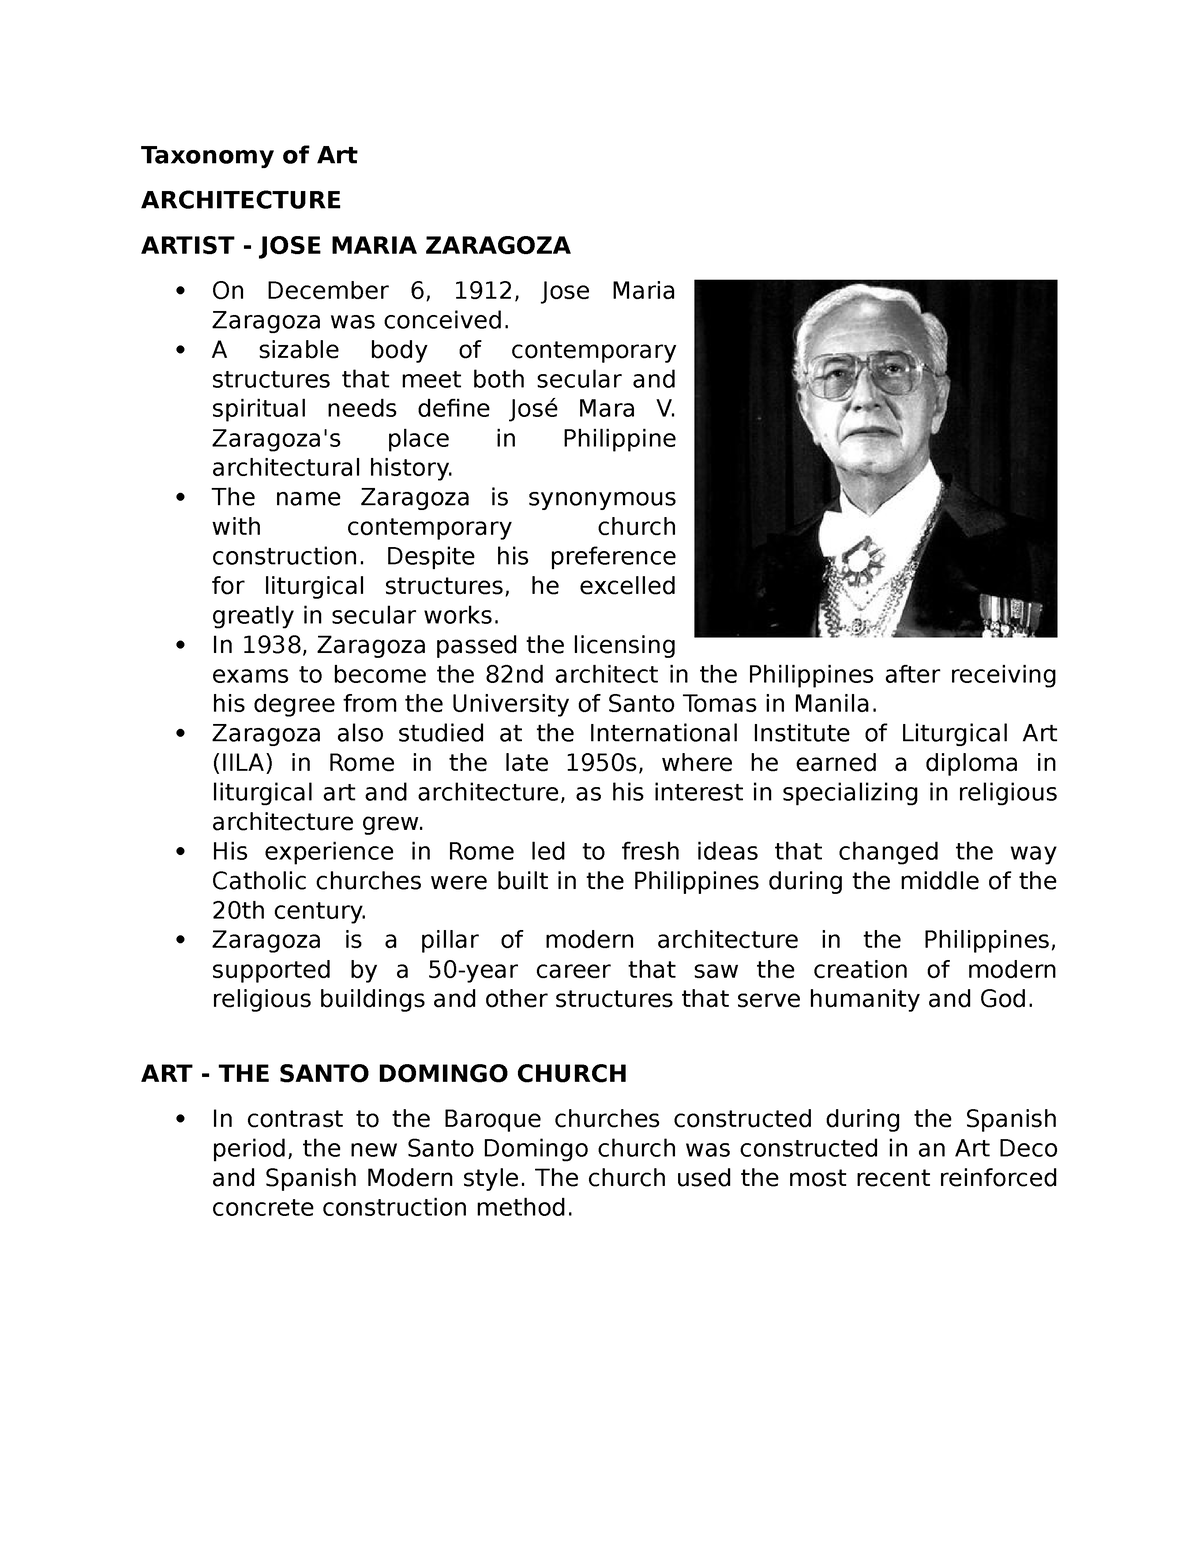 Taxonomy Of Art Taxonomy Of Art Architecture Artist Jose Maria Zaragoza On December 6 1912 